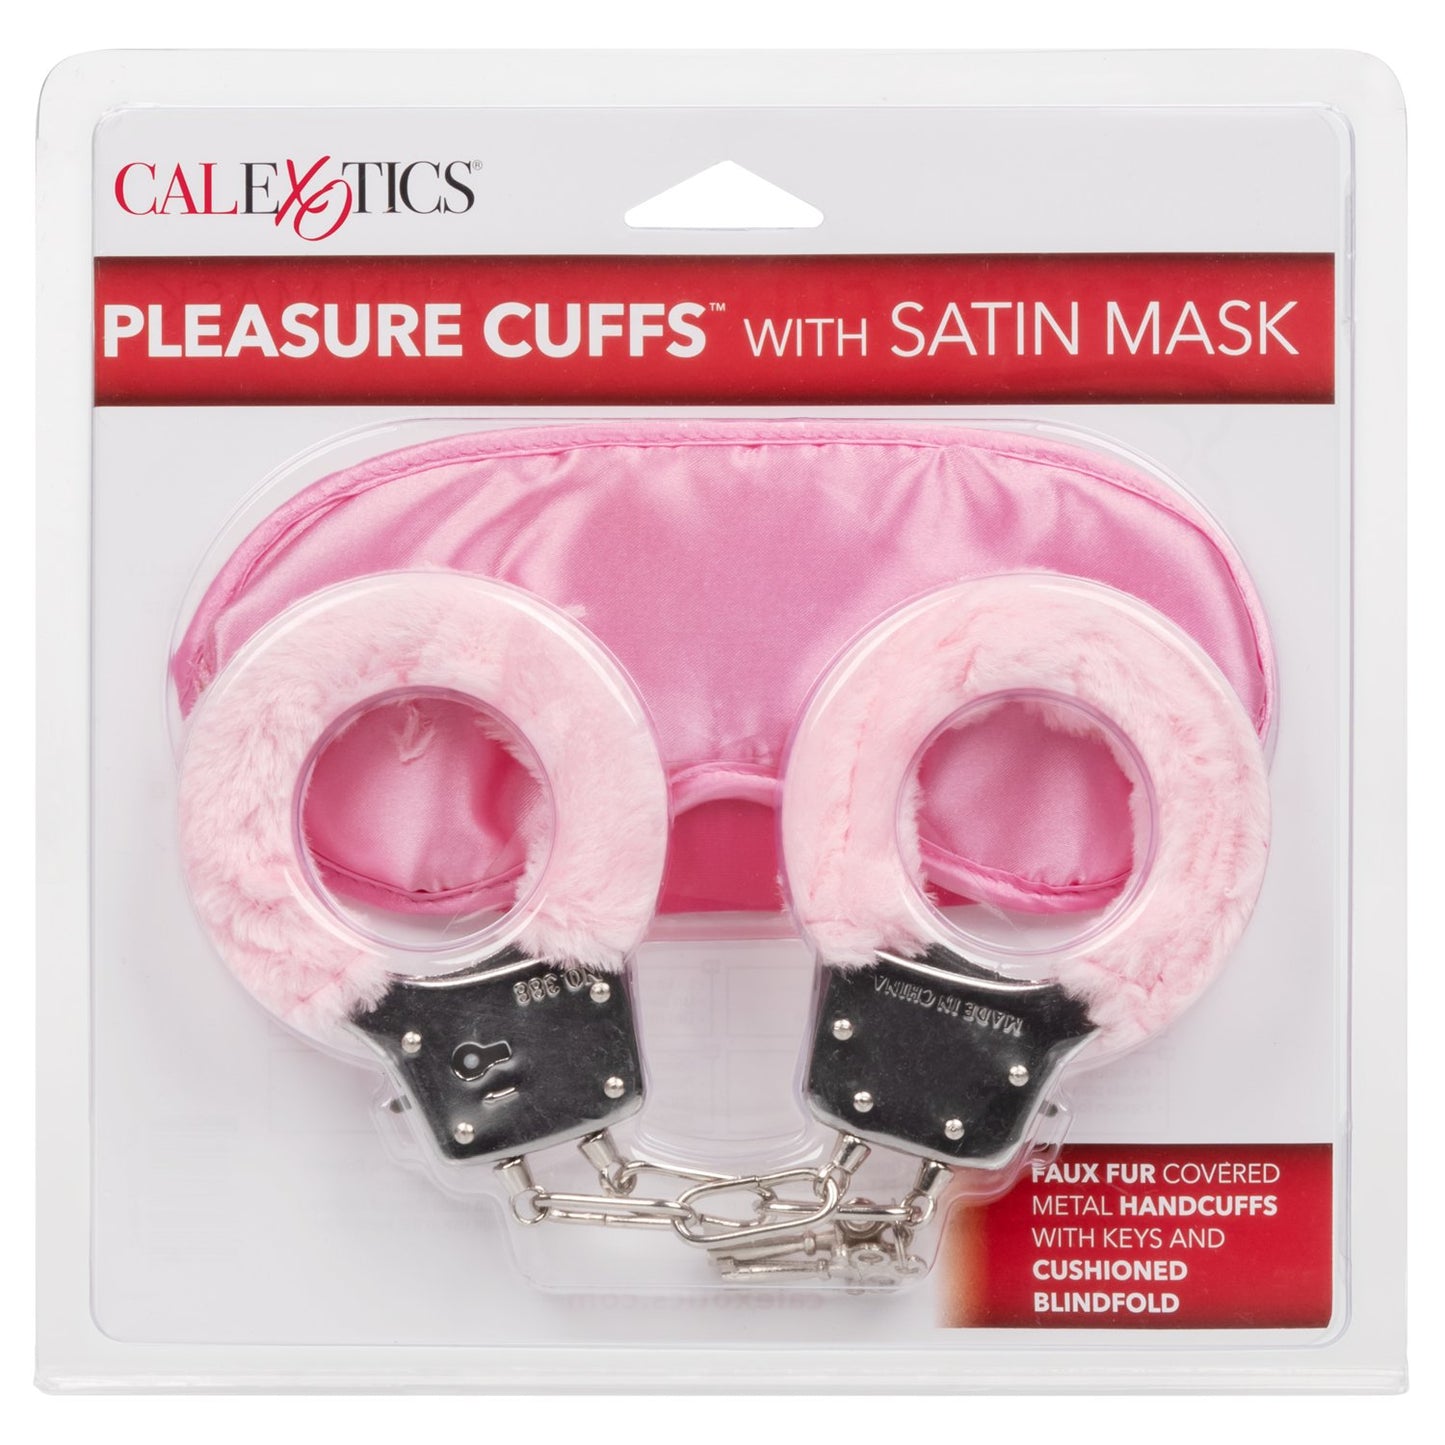 Pleasure Cuffs With Satin Mask